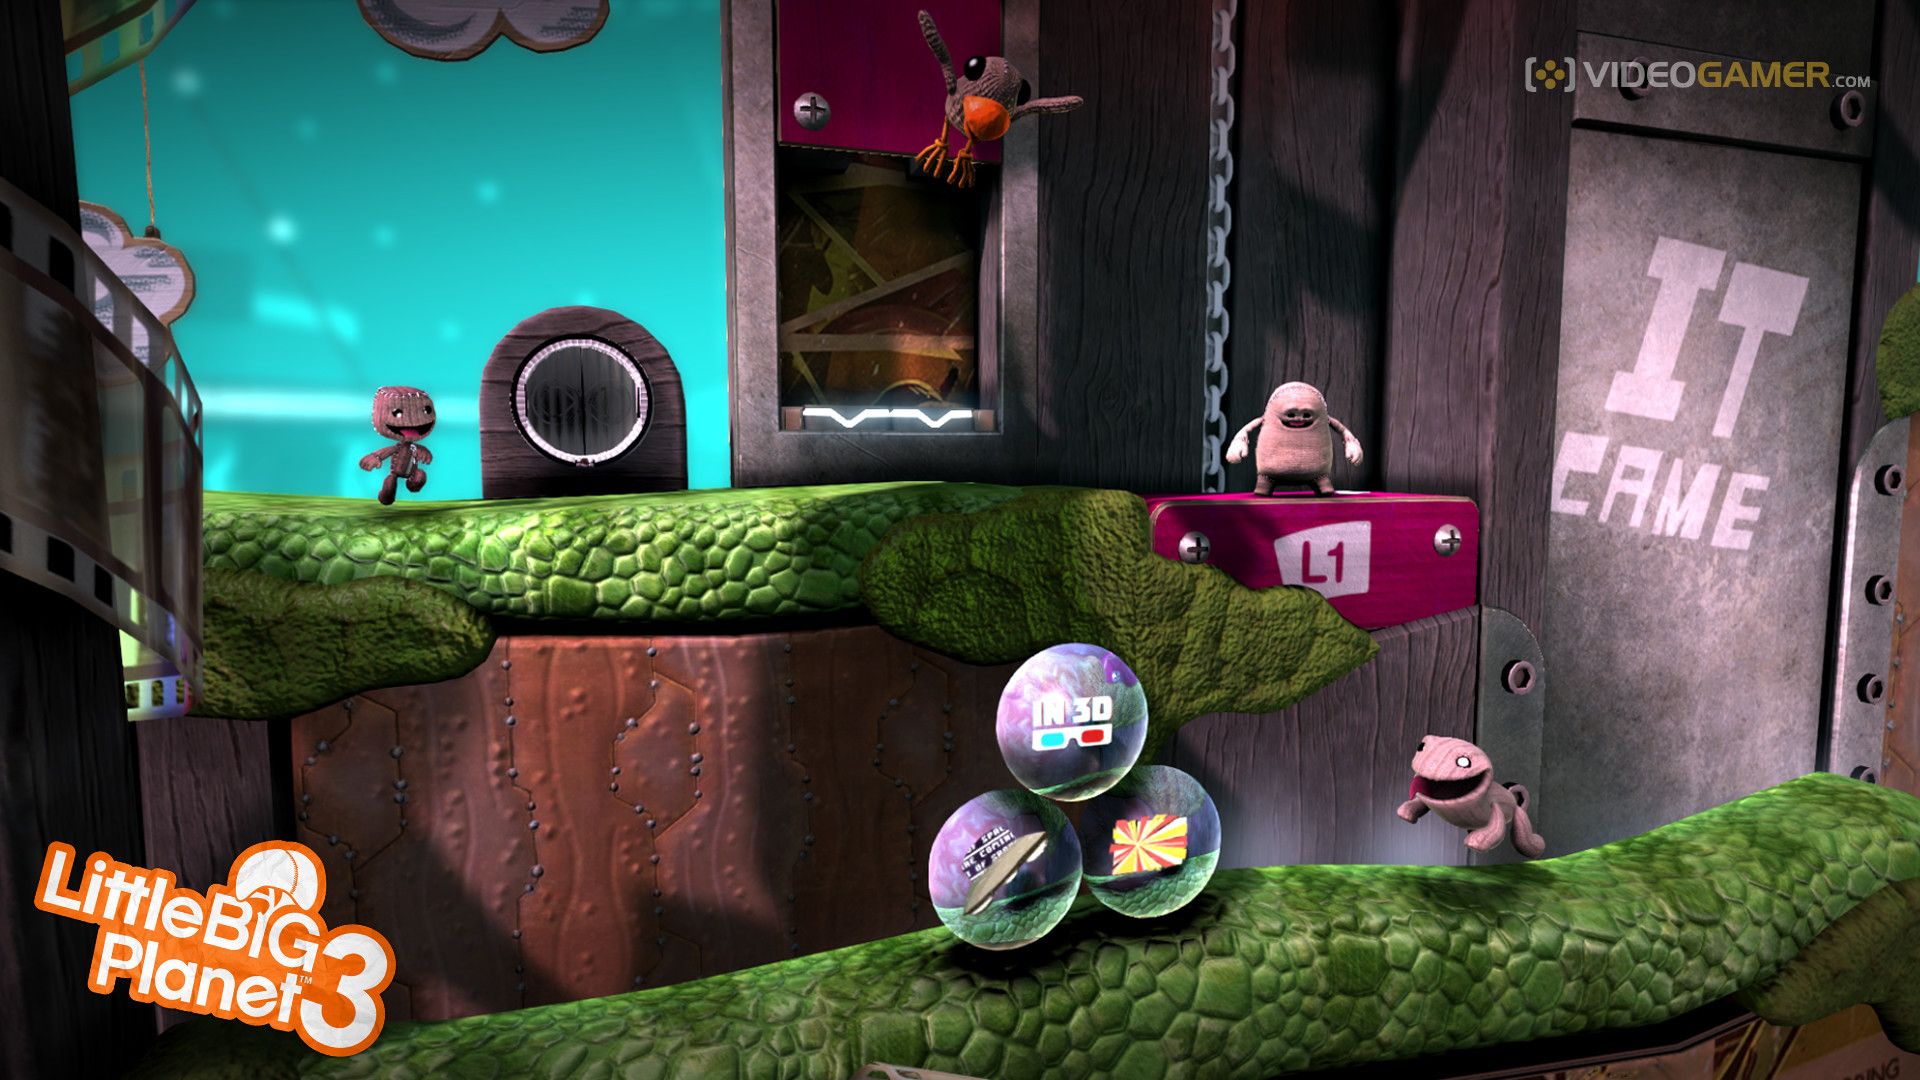 LittleBigPlanet 3 Backgrounds on Wallpapers Vista